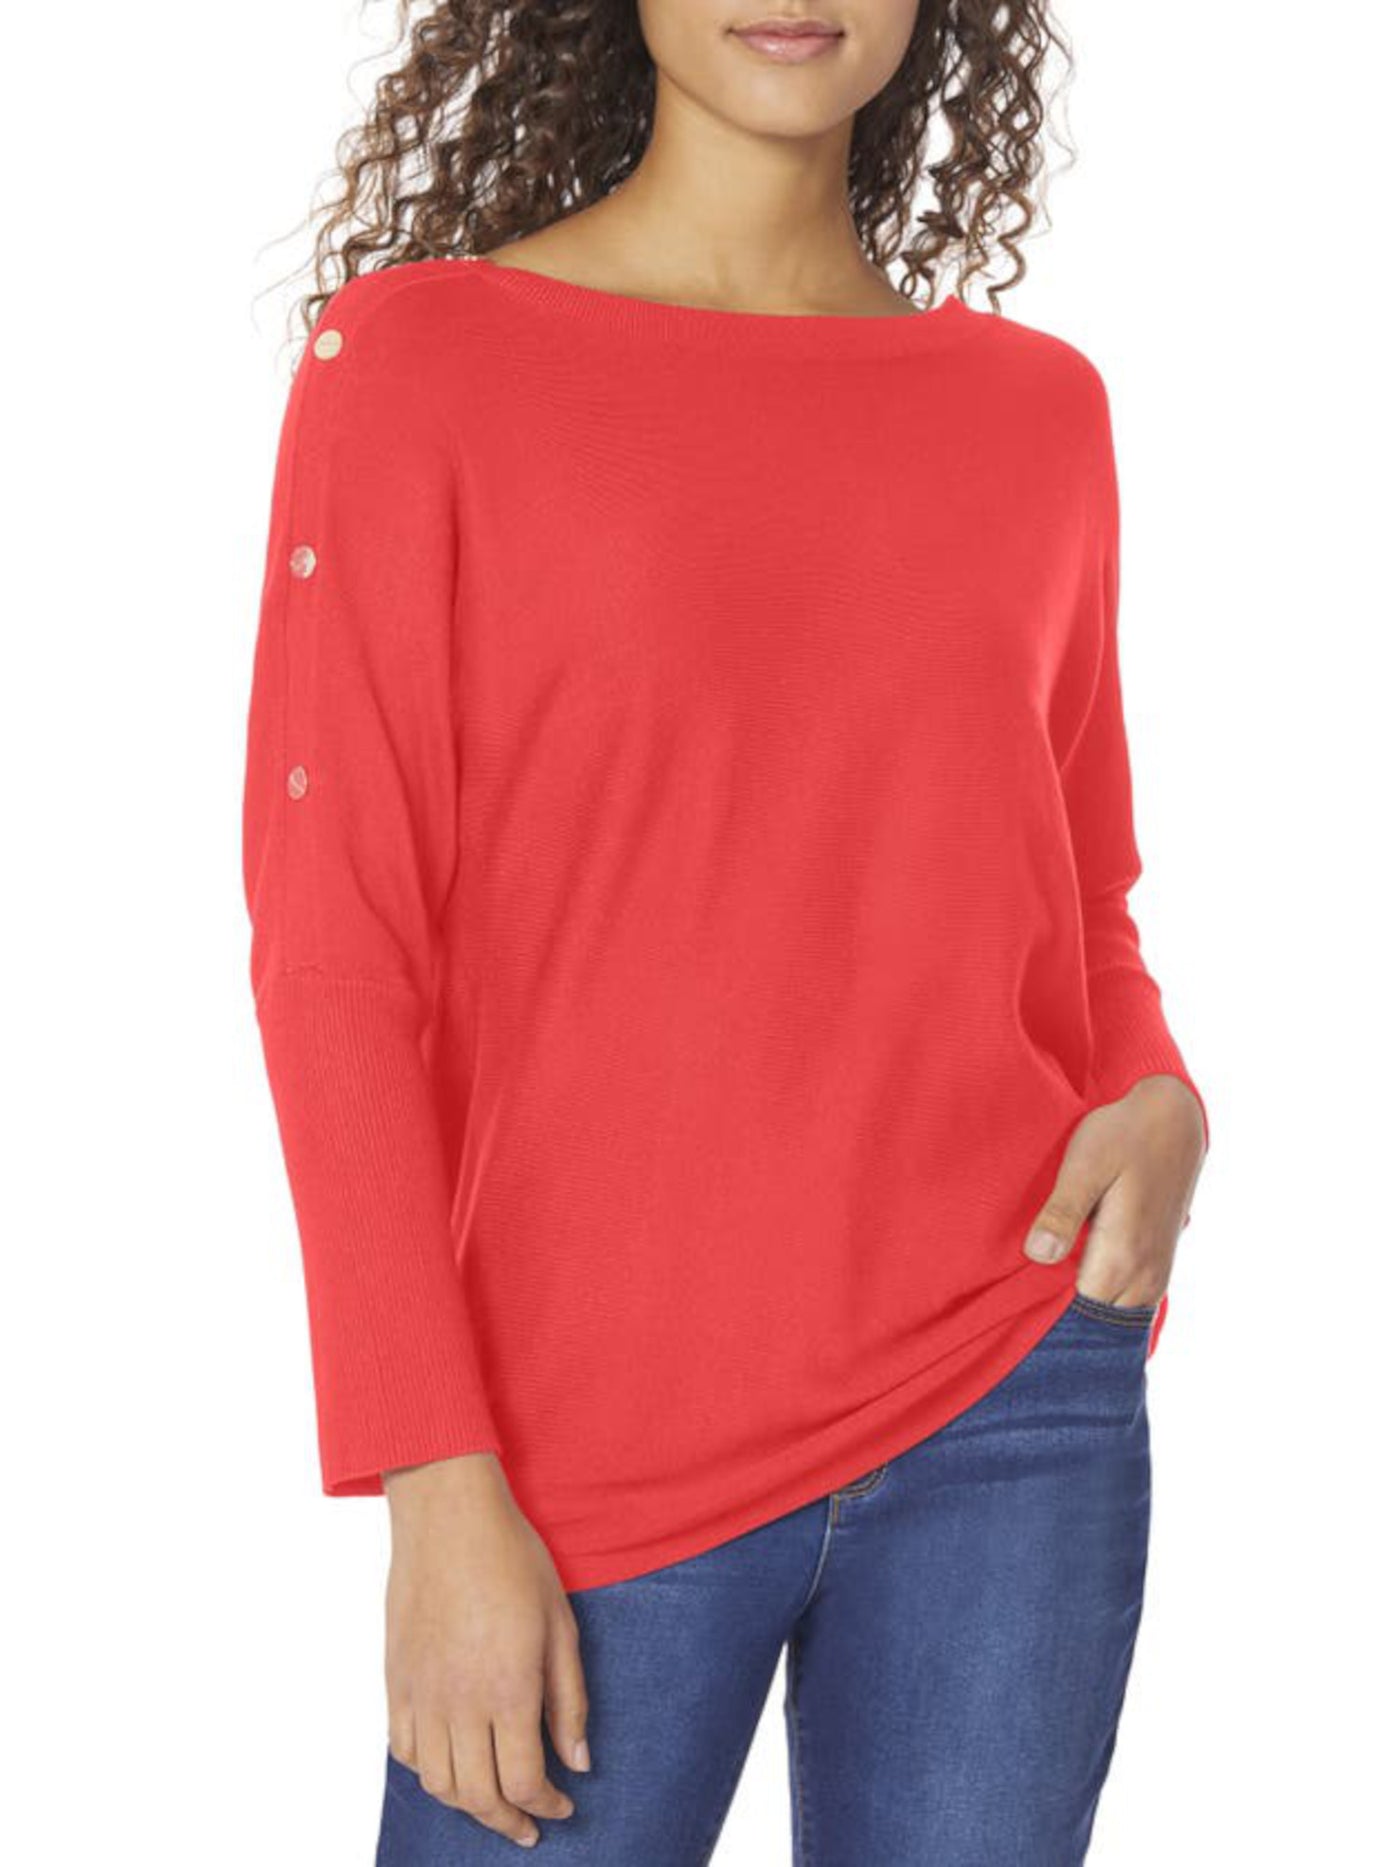 JONES NEW YORK Womens Red Long Sleeve Boat Neck Wear To Work Sweater L